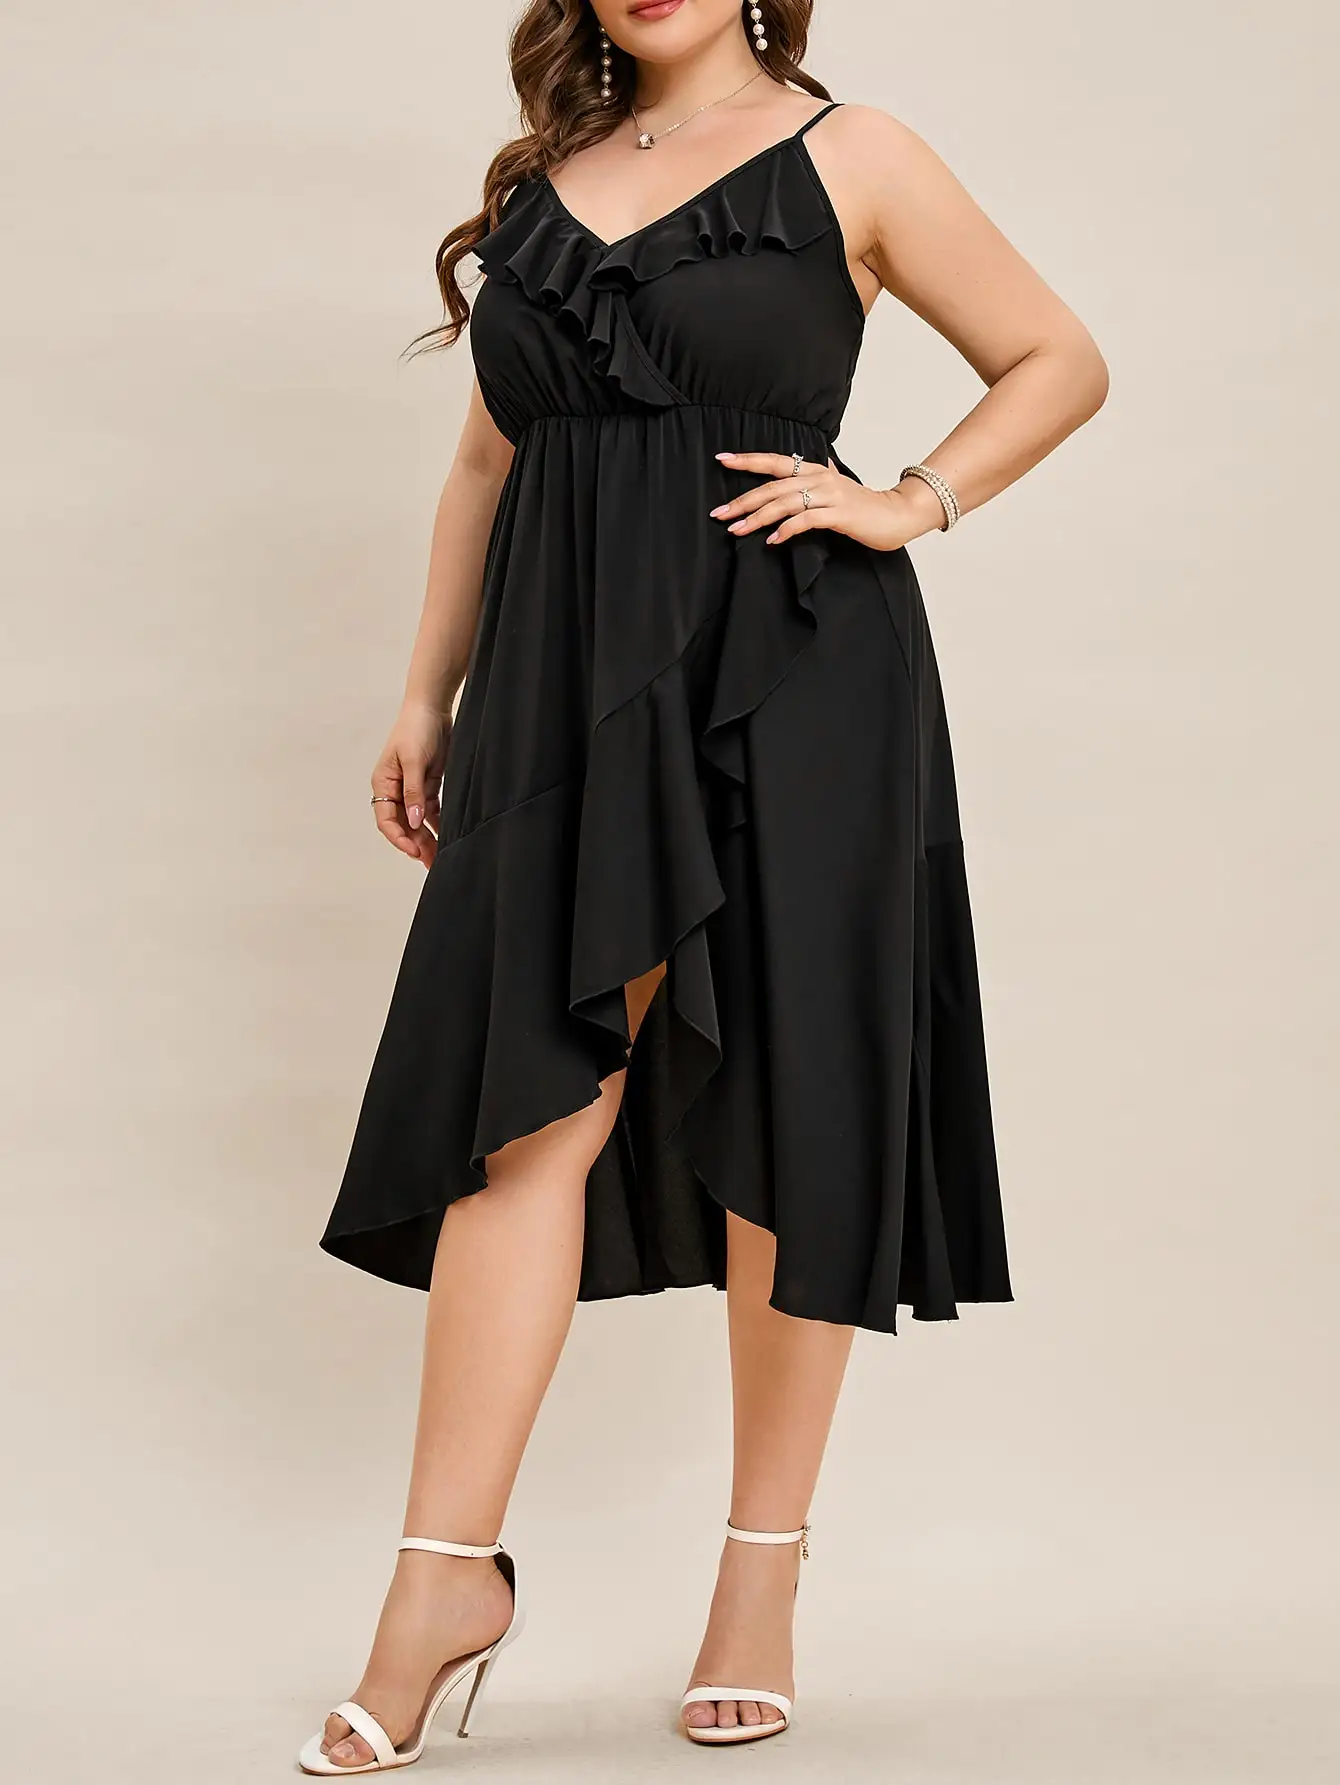 Plus Size Black Summer Midi Dress for Women 2022 V Neck Loose Elegant  A Line Party Cocktail Dresses Large Size Clothing